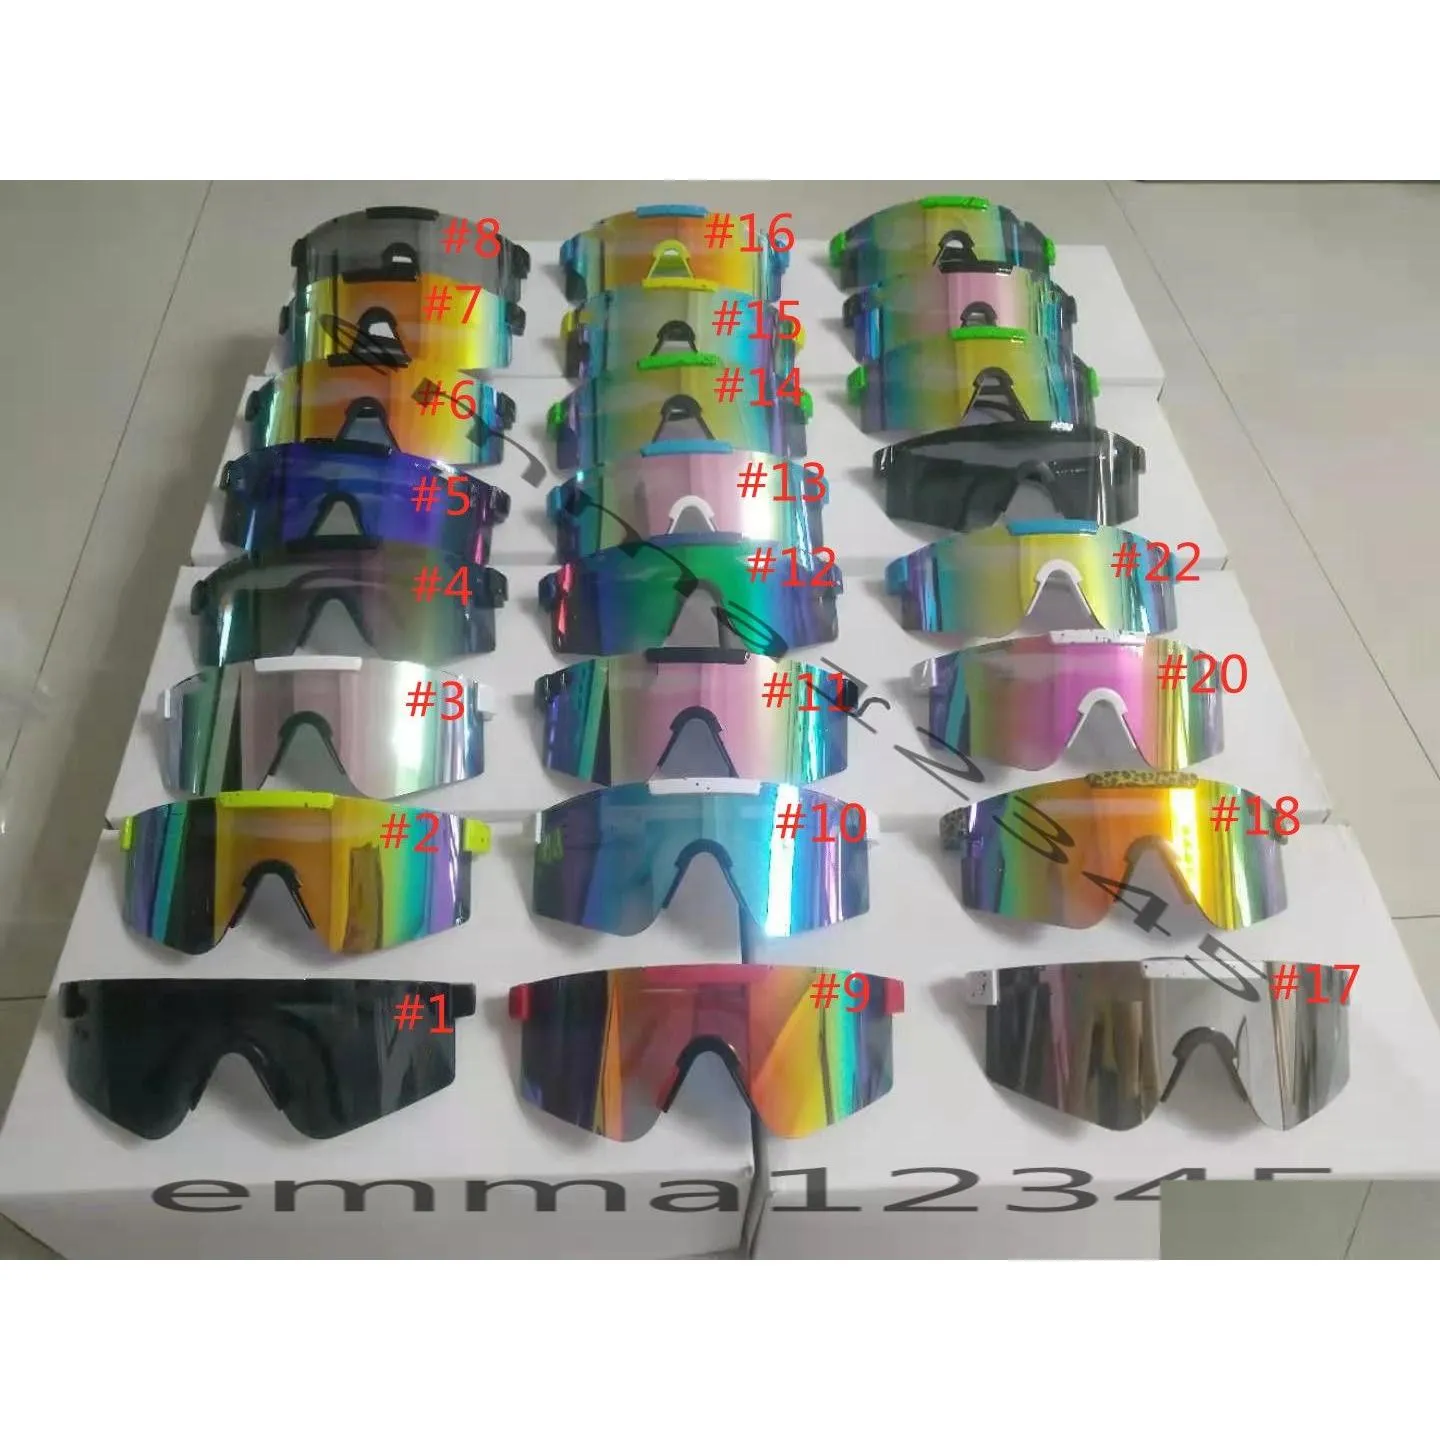 25 color original sunglasses cycling glasses fast ship mtb bicycle eyewear windproof ski sport no polarized uv400 for men/woman